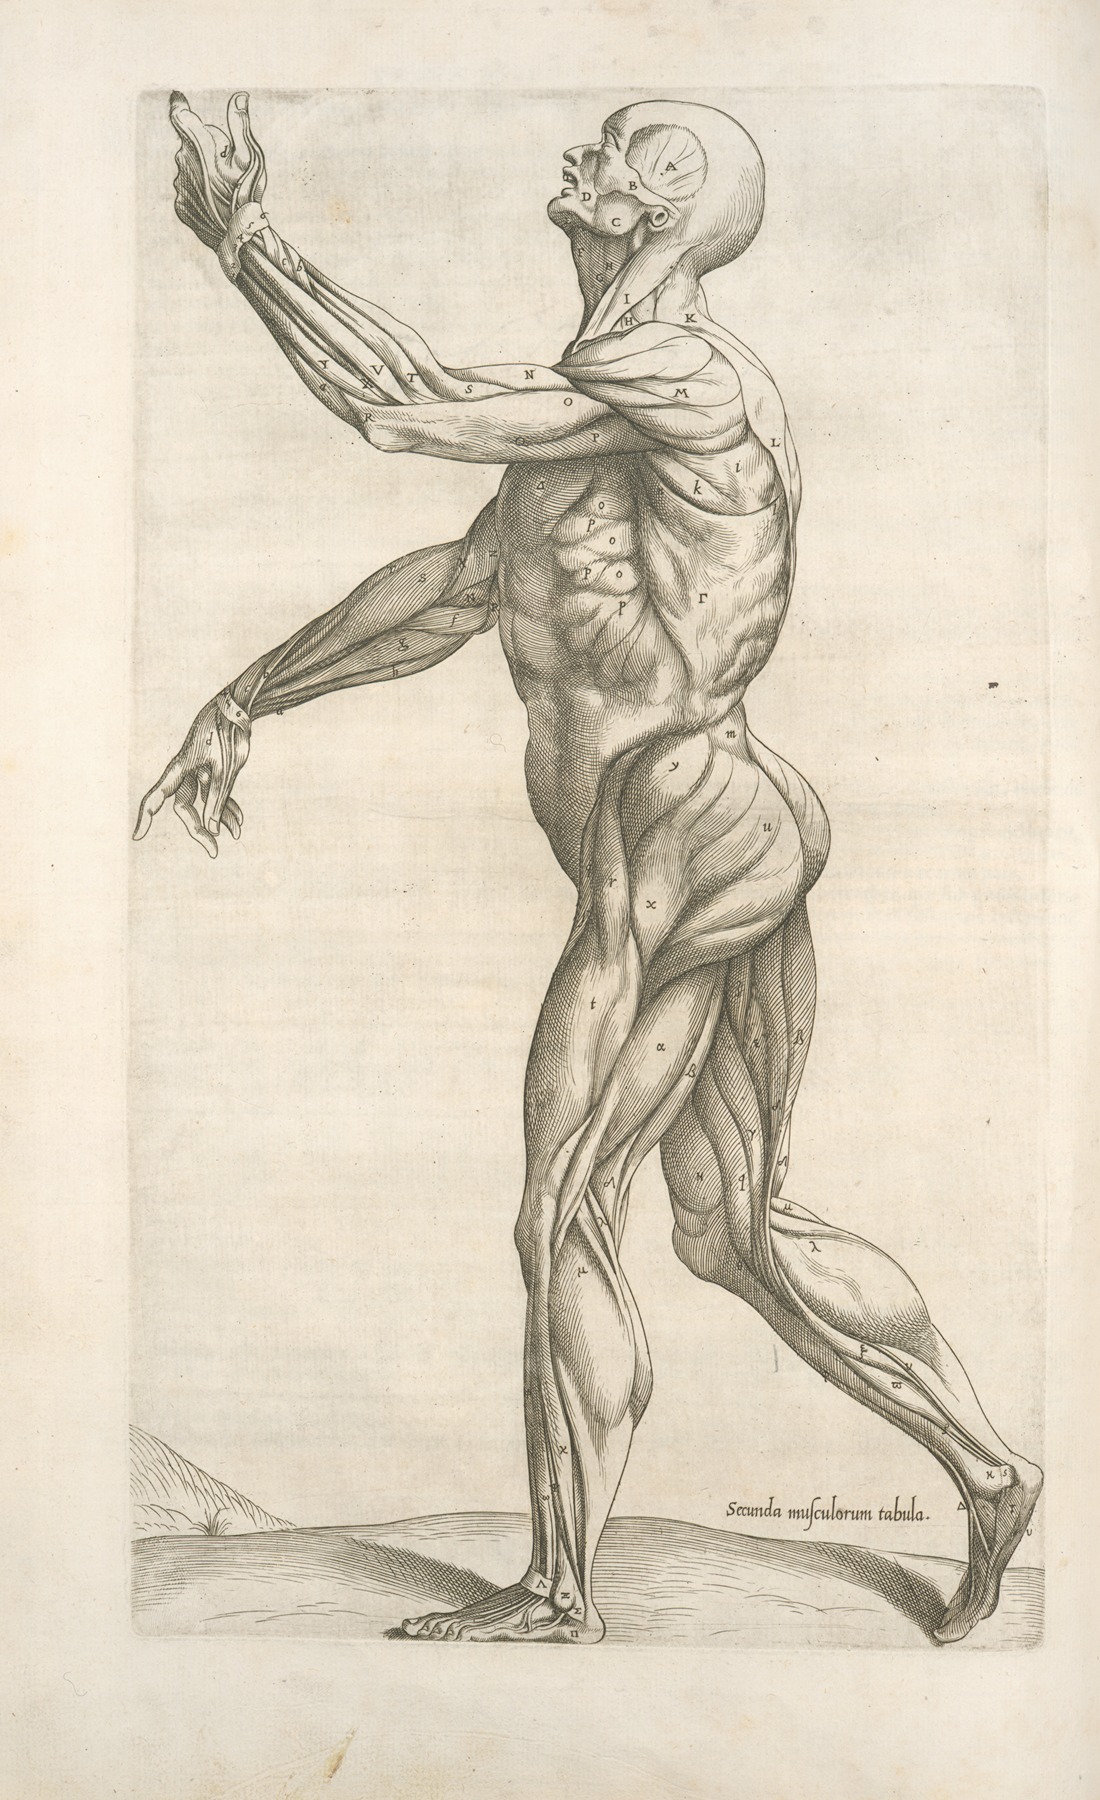 Thomas Geminus - Secunda musculorum tabula. [Shows muscles in a walking position]